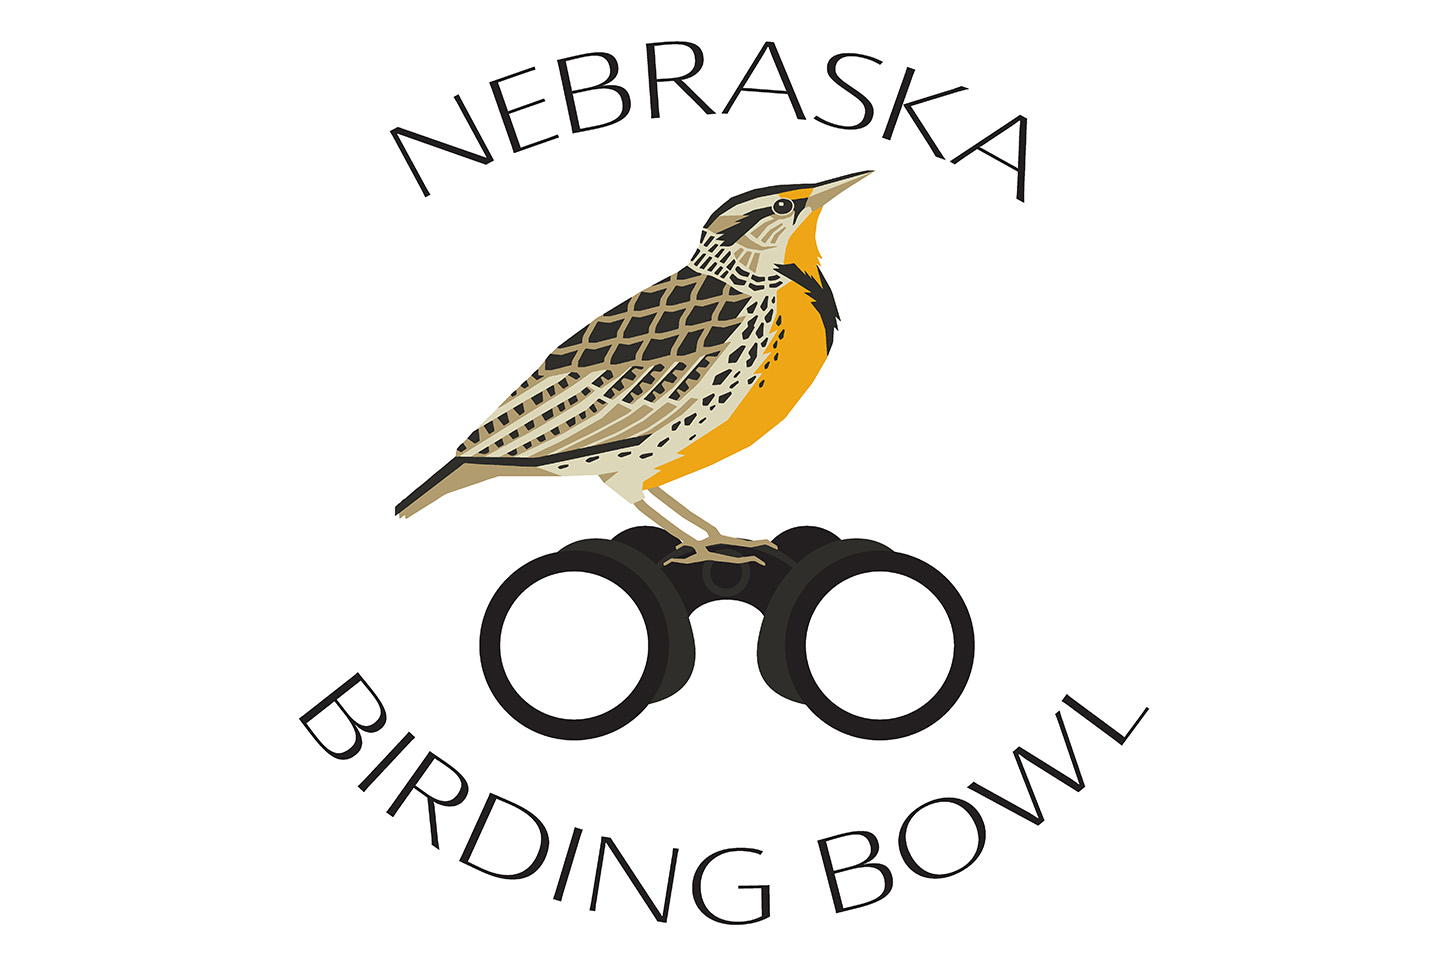 Nebraska birding bowl logo with western meadowlark perched on binoculars.